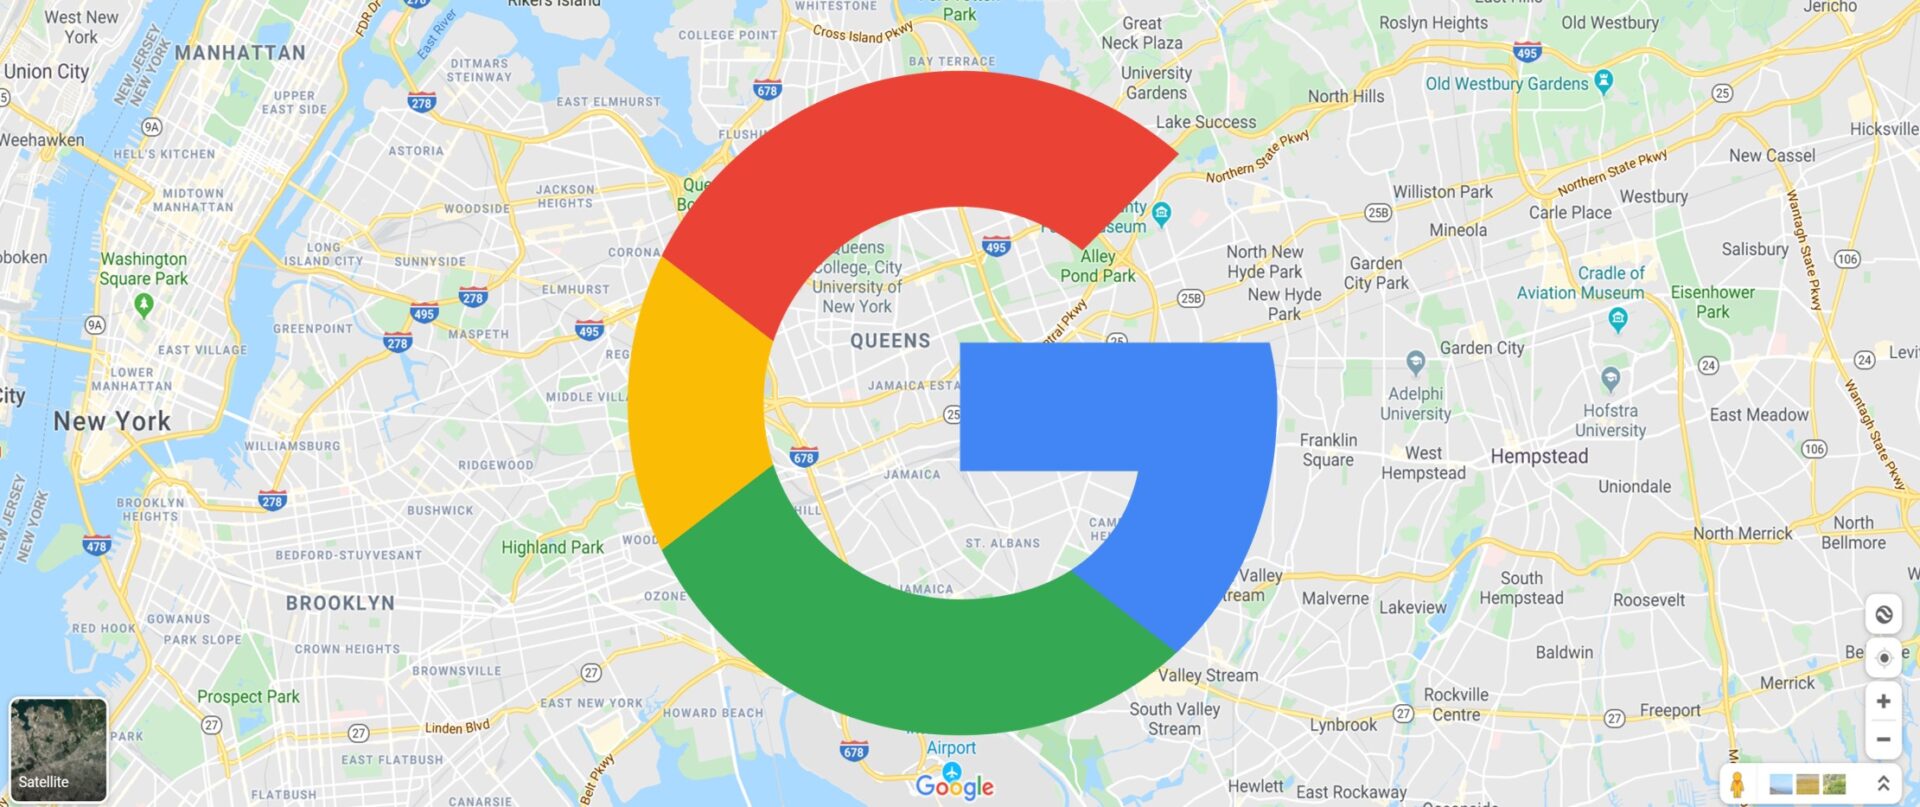 Google Maps Data 1920x807 